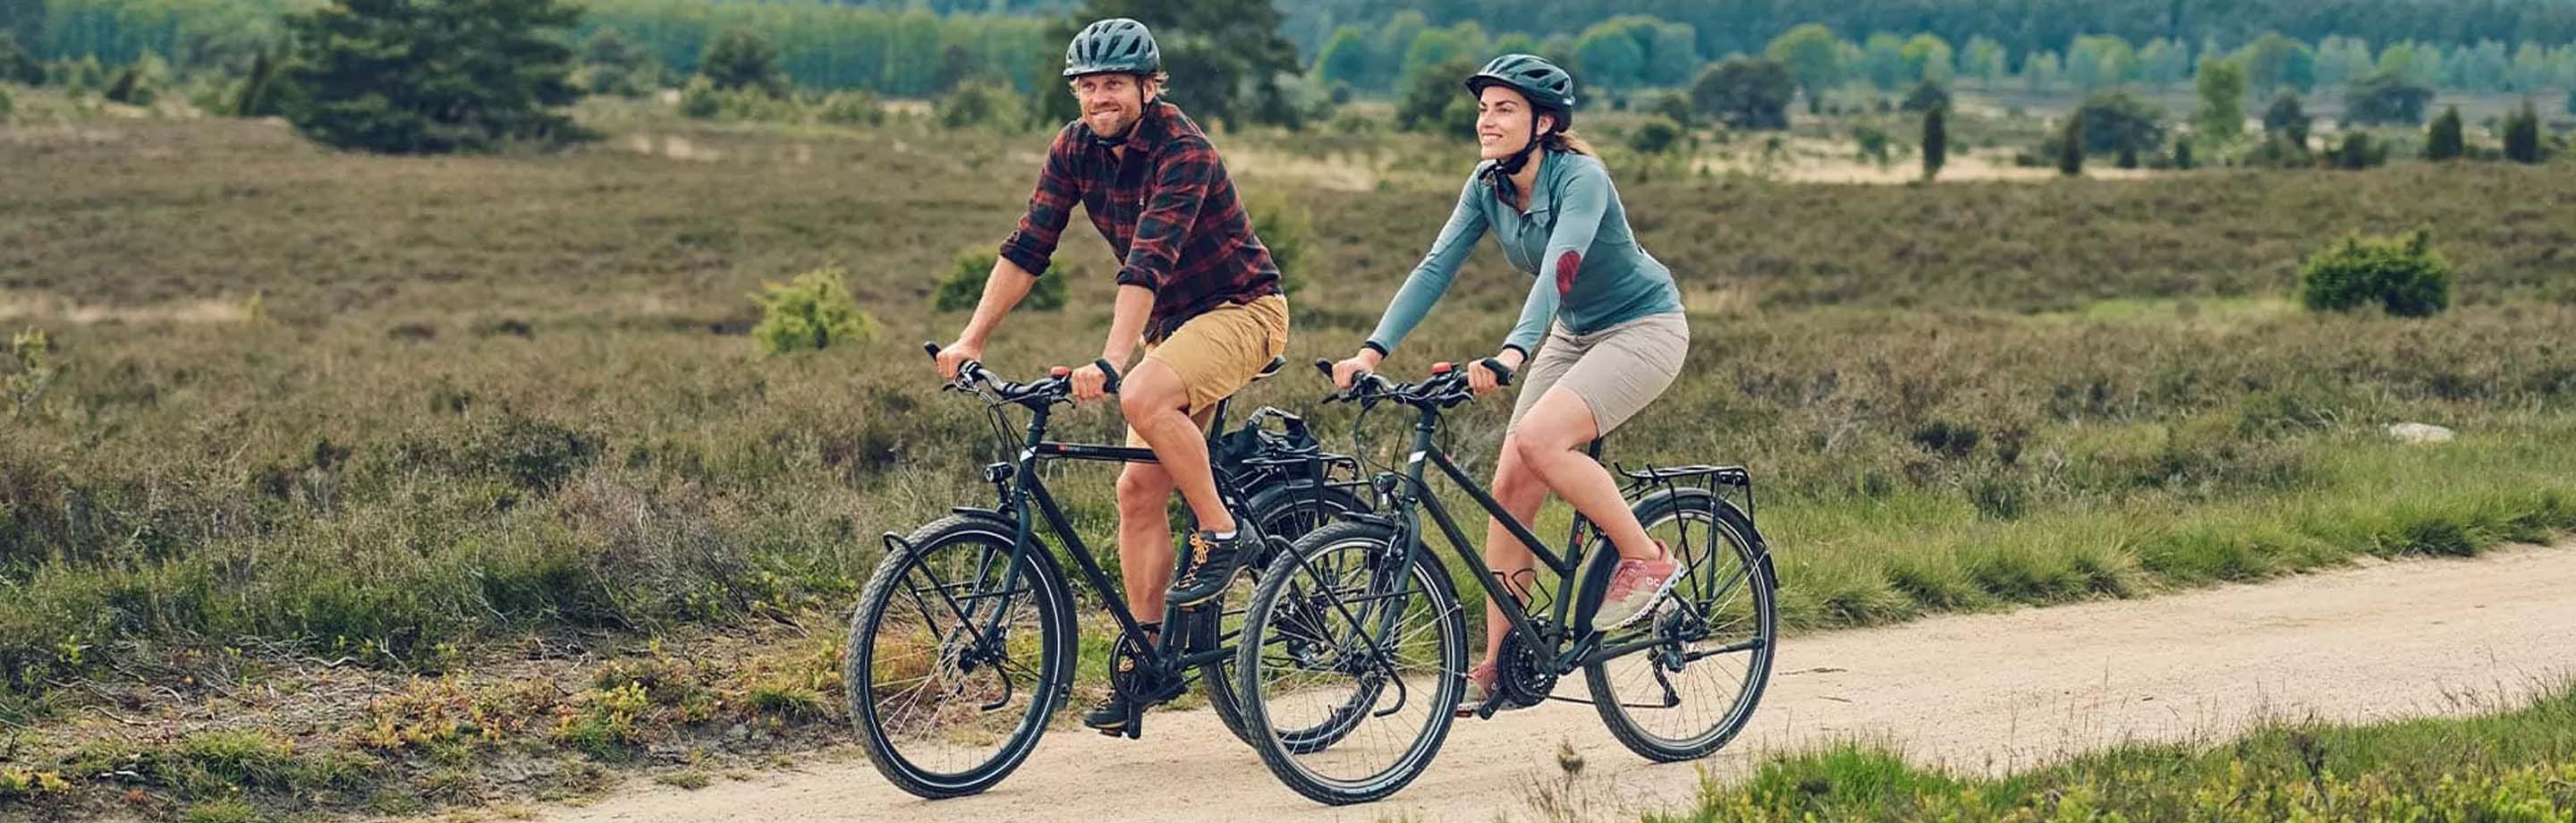 vsf fahrradmanufaktur - Durable Ecological Trekking Bikes and Touring Bikes